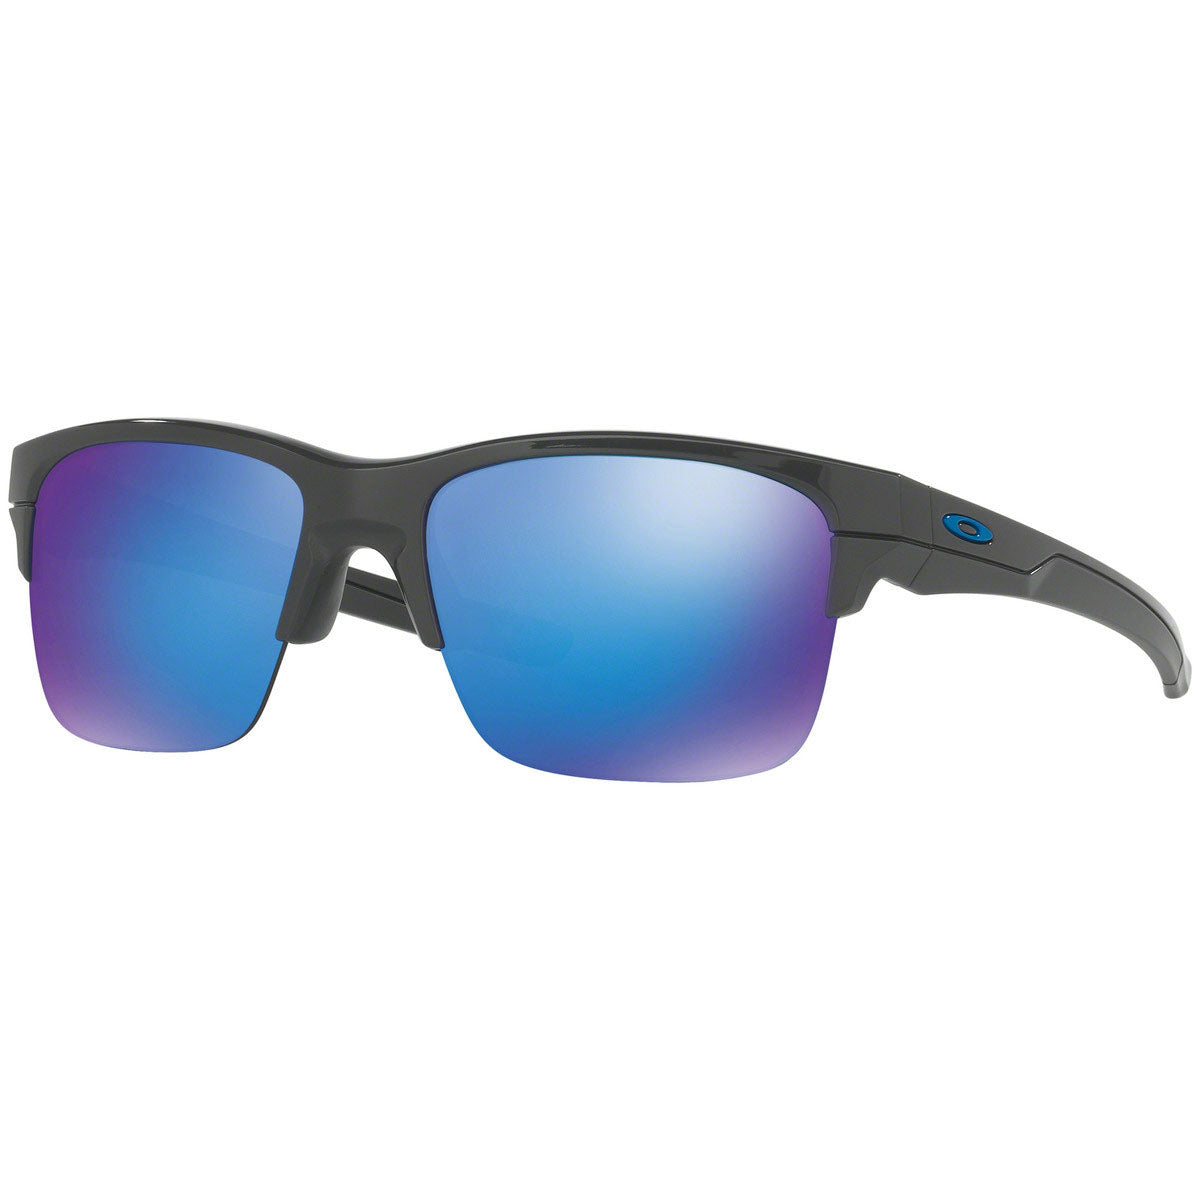 Oakley Thinlink Sunglasses - Dark Grey / Sapphire Iridium Lens - OO9316-04